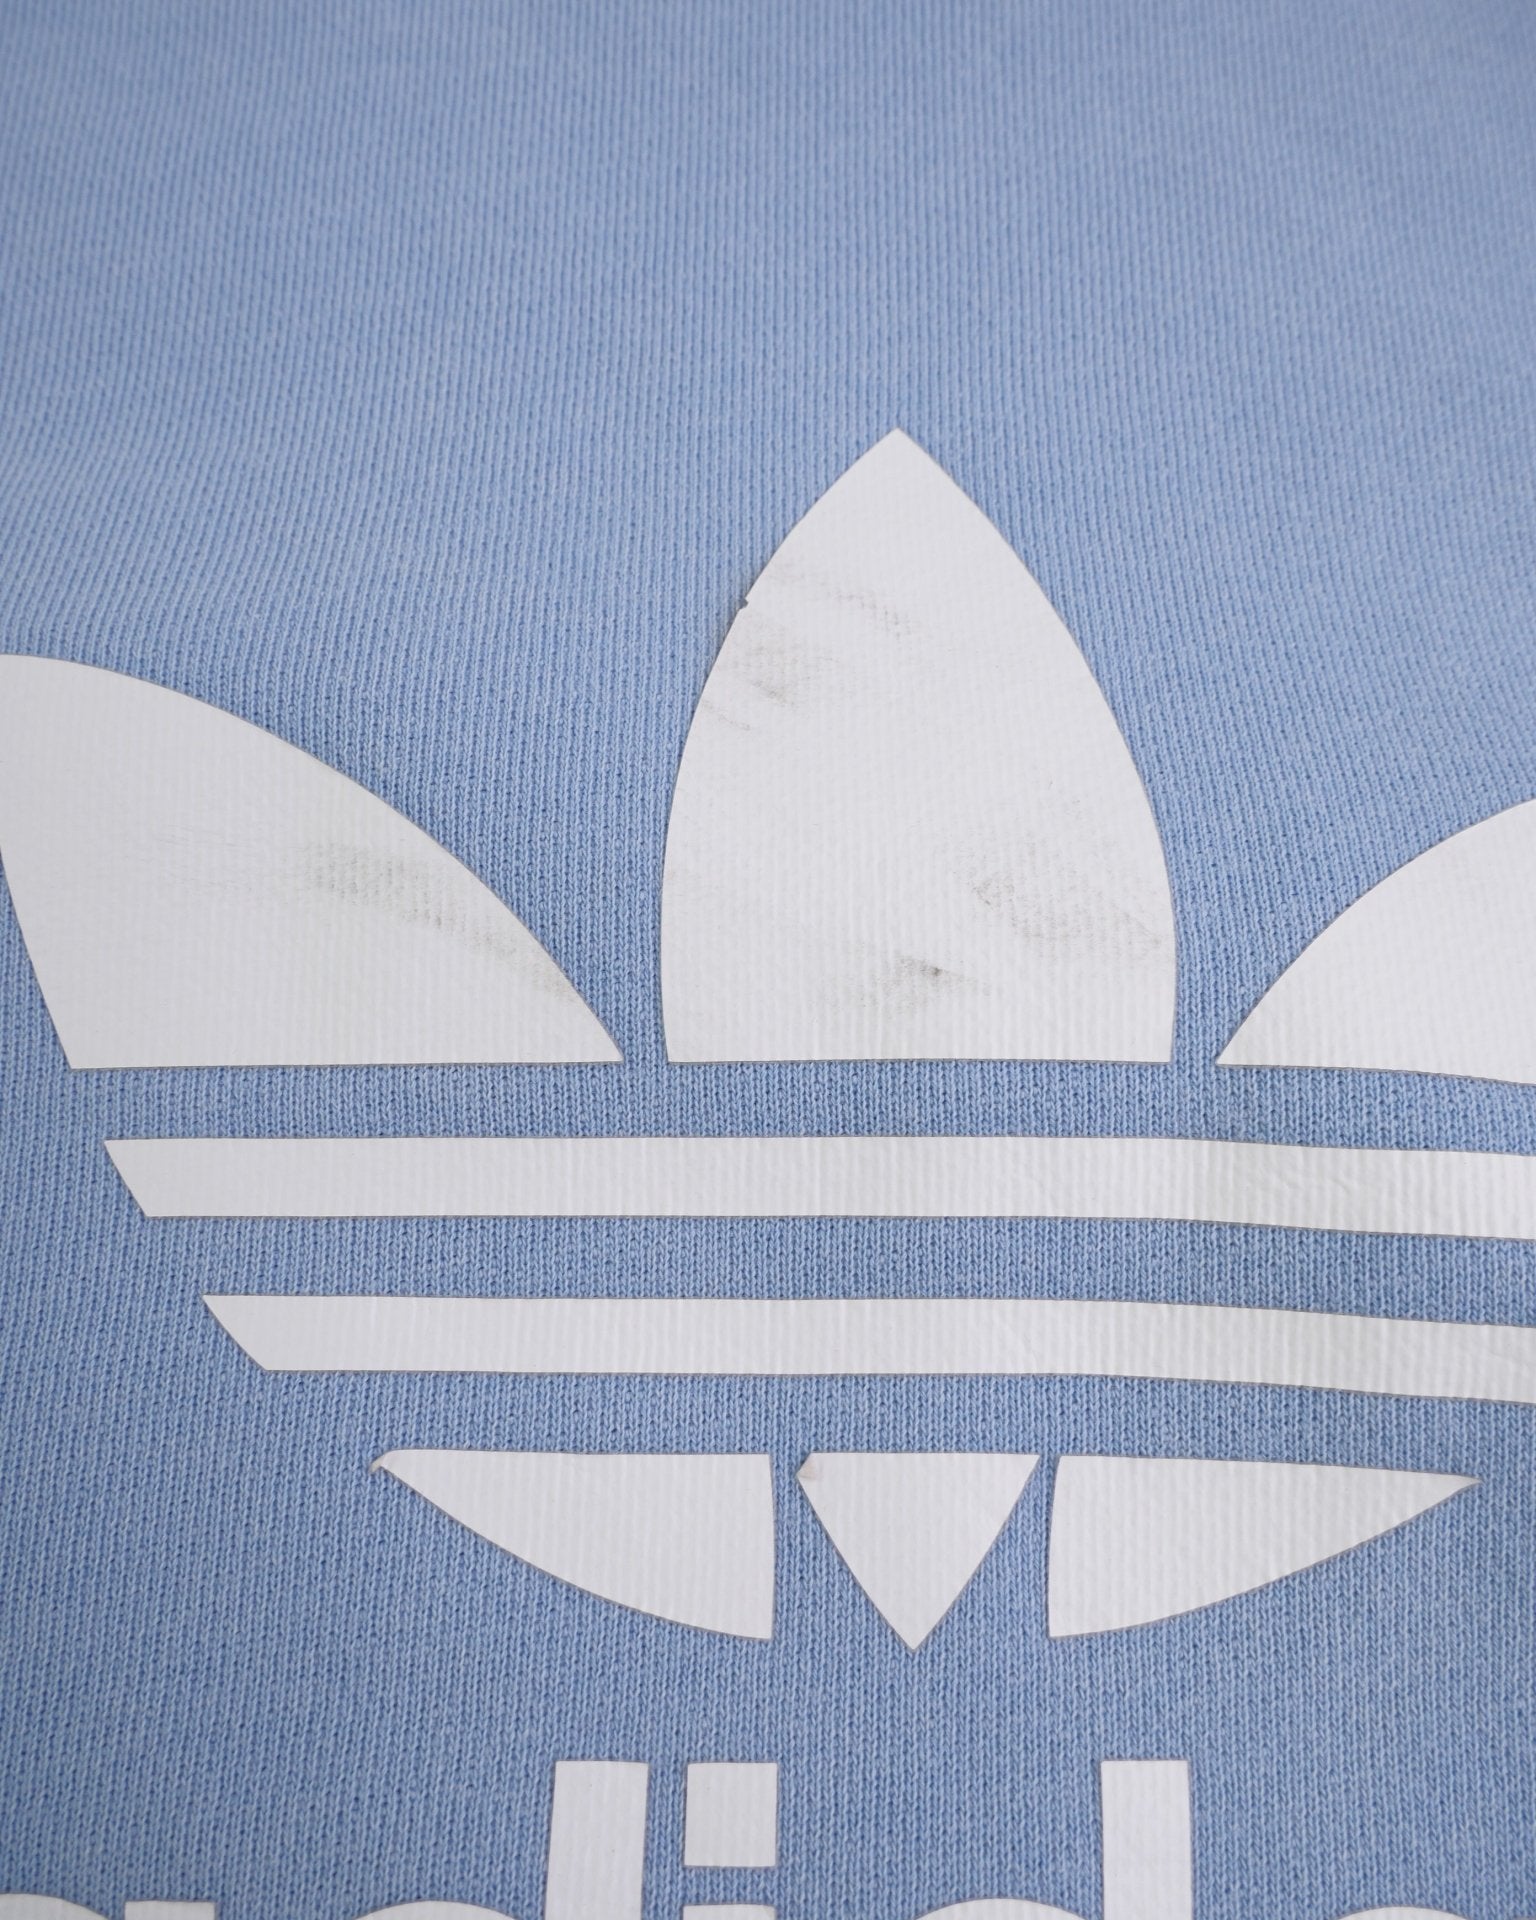 Adidas printed Logo babyblue Sweater - Peeces